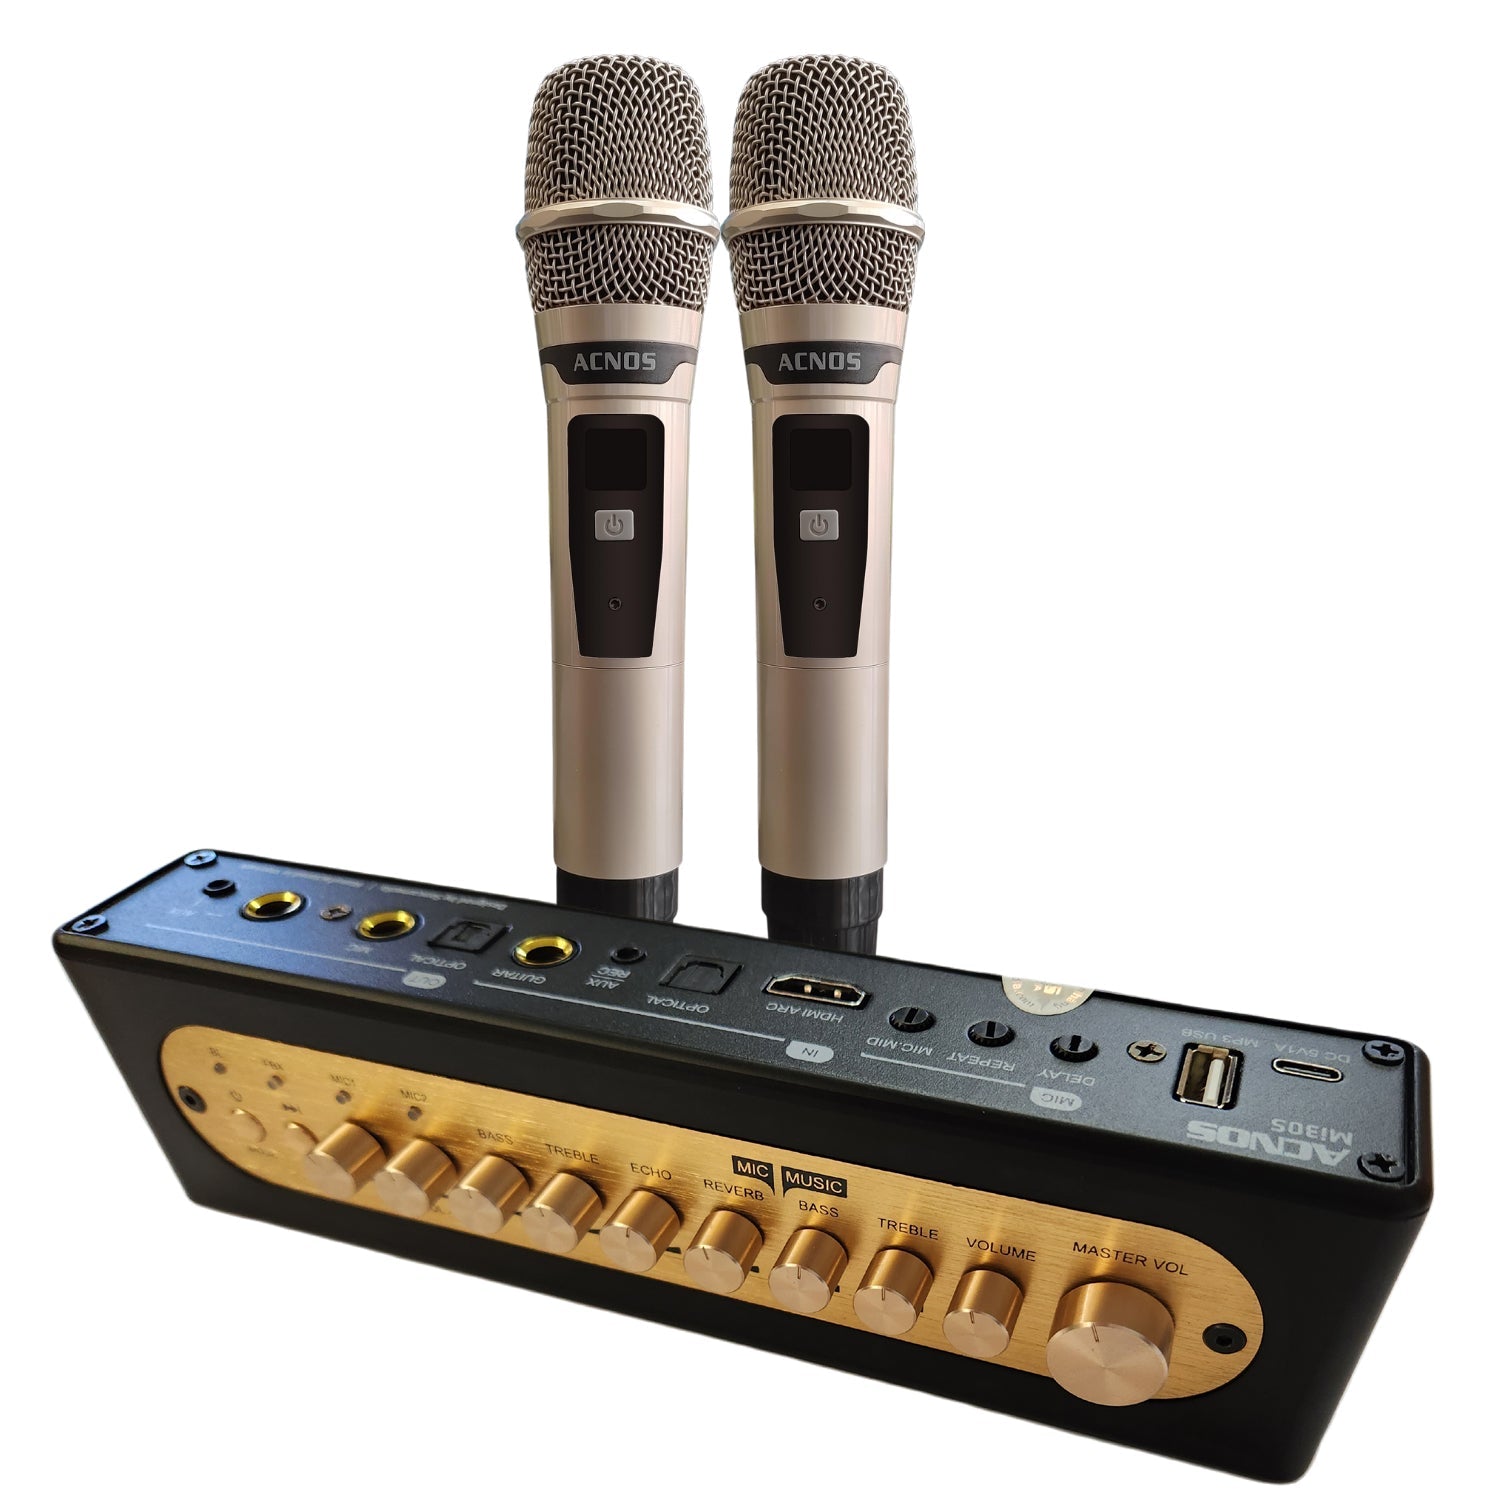 ACNOS SK9018PLUS + Mi-30s Mixer + Wireless Microphones (Package Deal) - Karaoke Home Entertainment